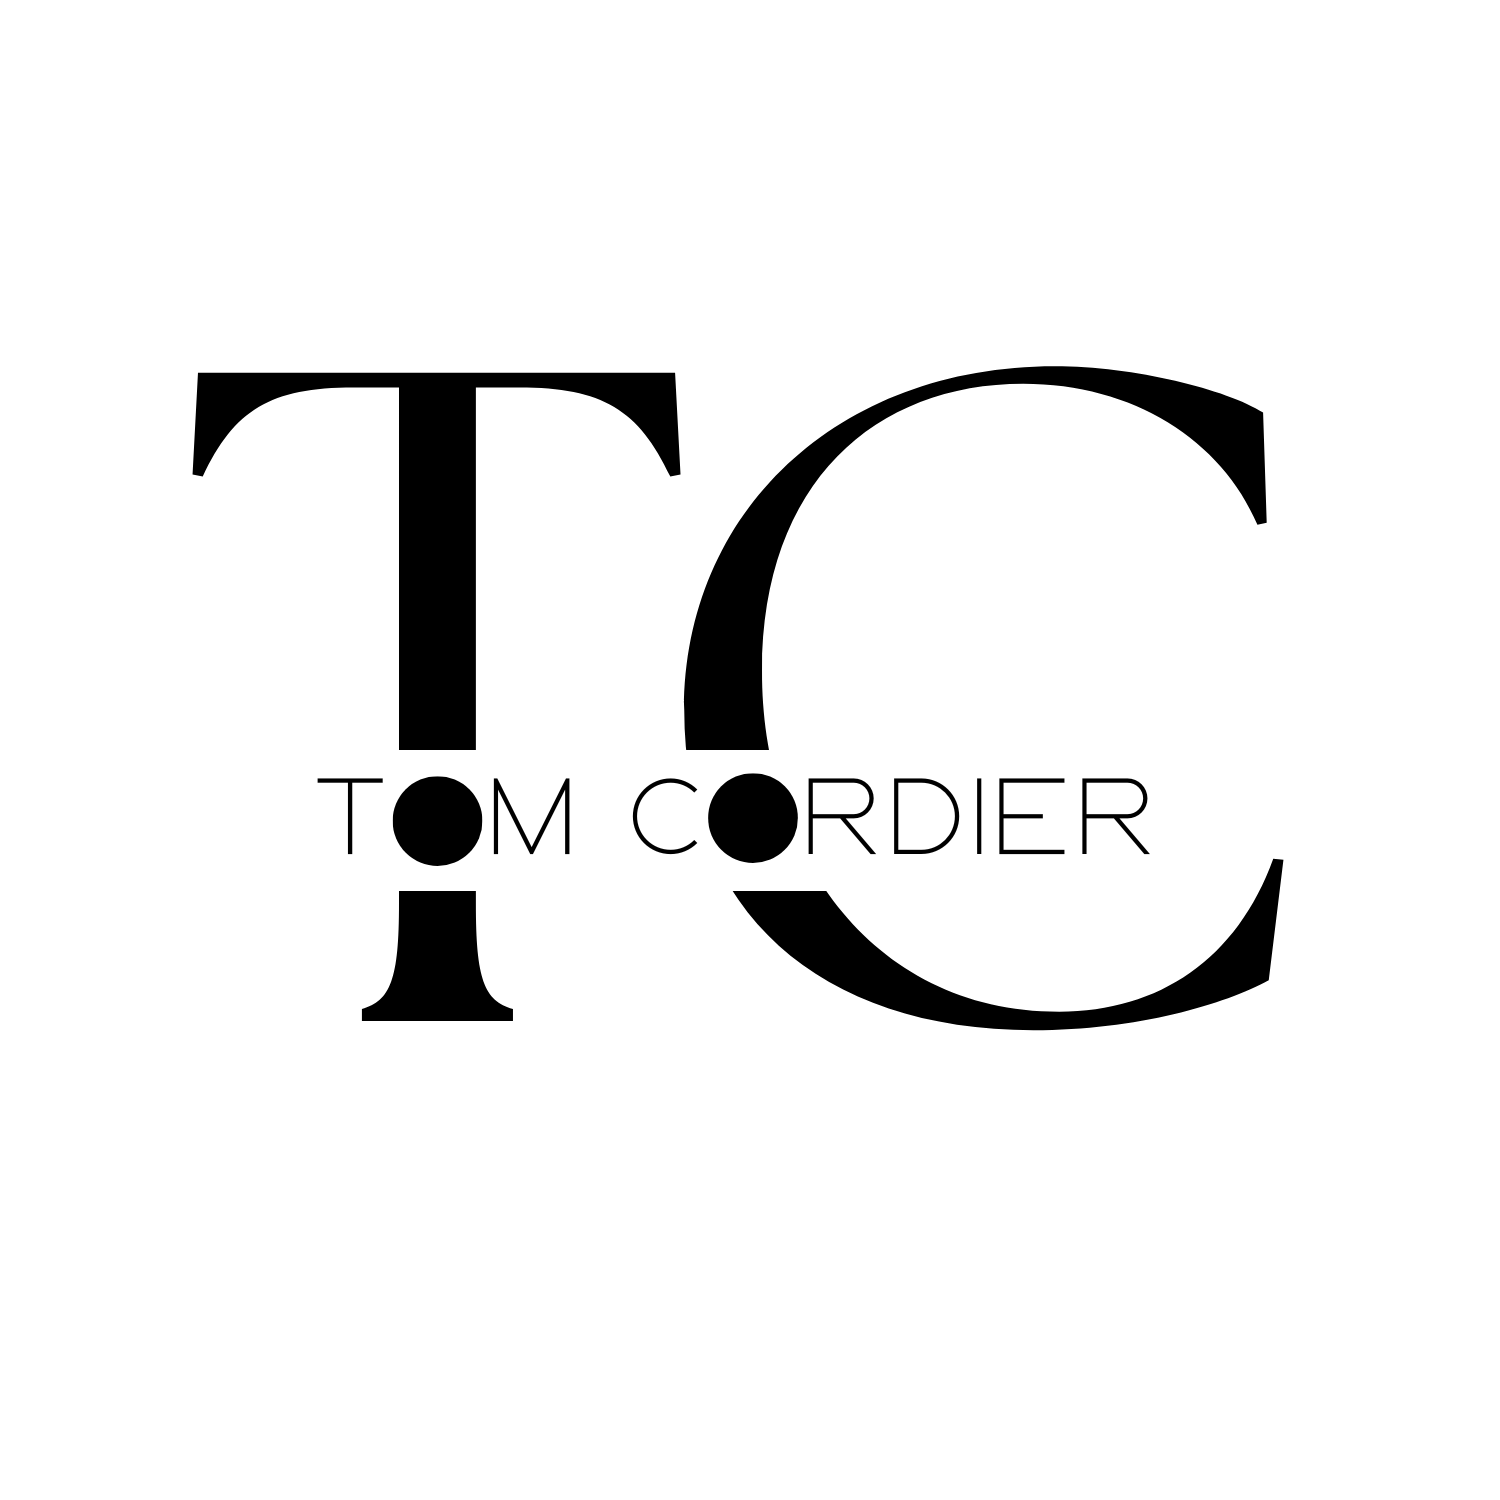 Tom Cordier 